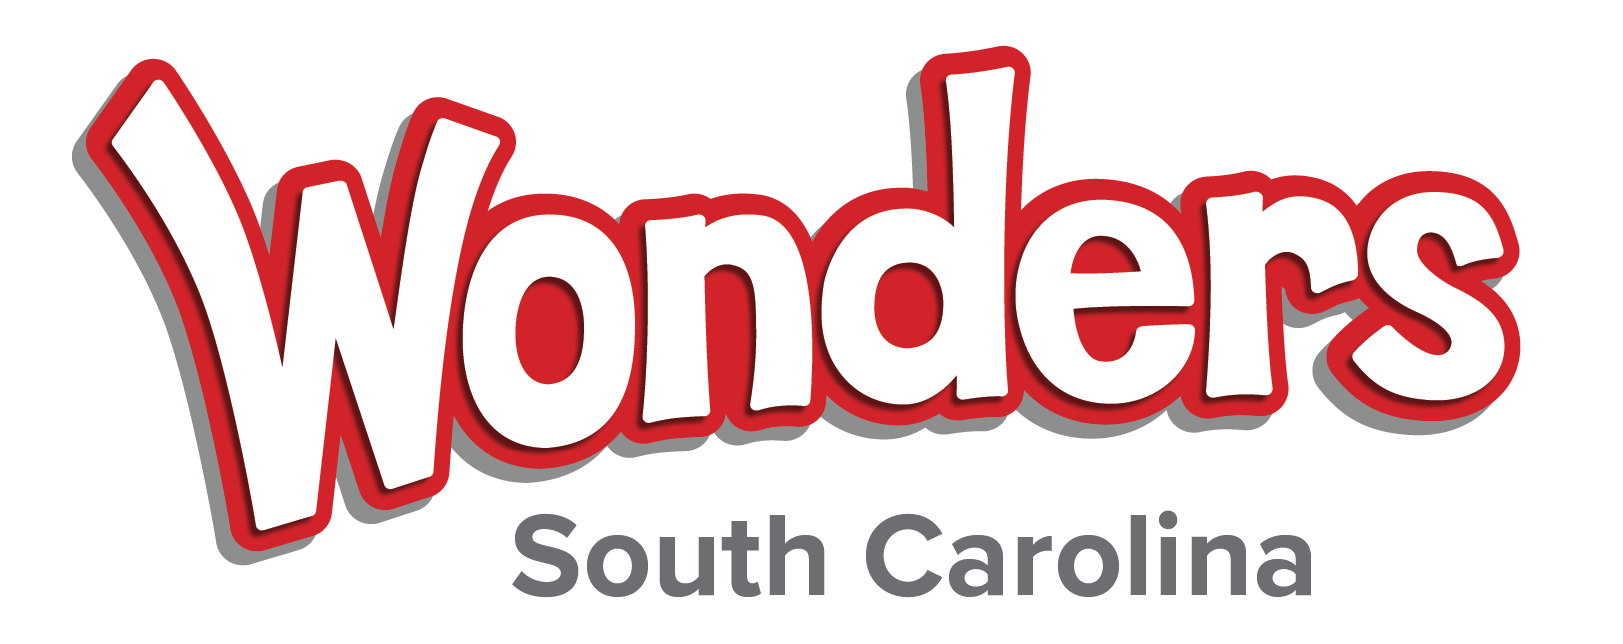 South Carolina Wonders